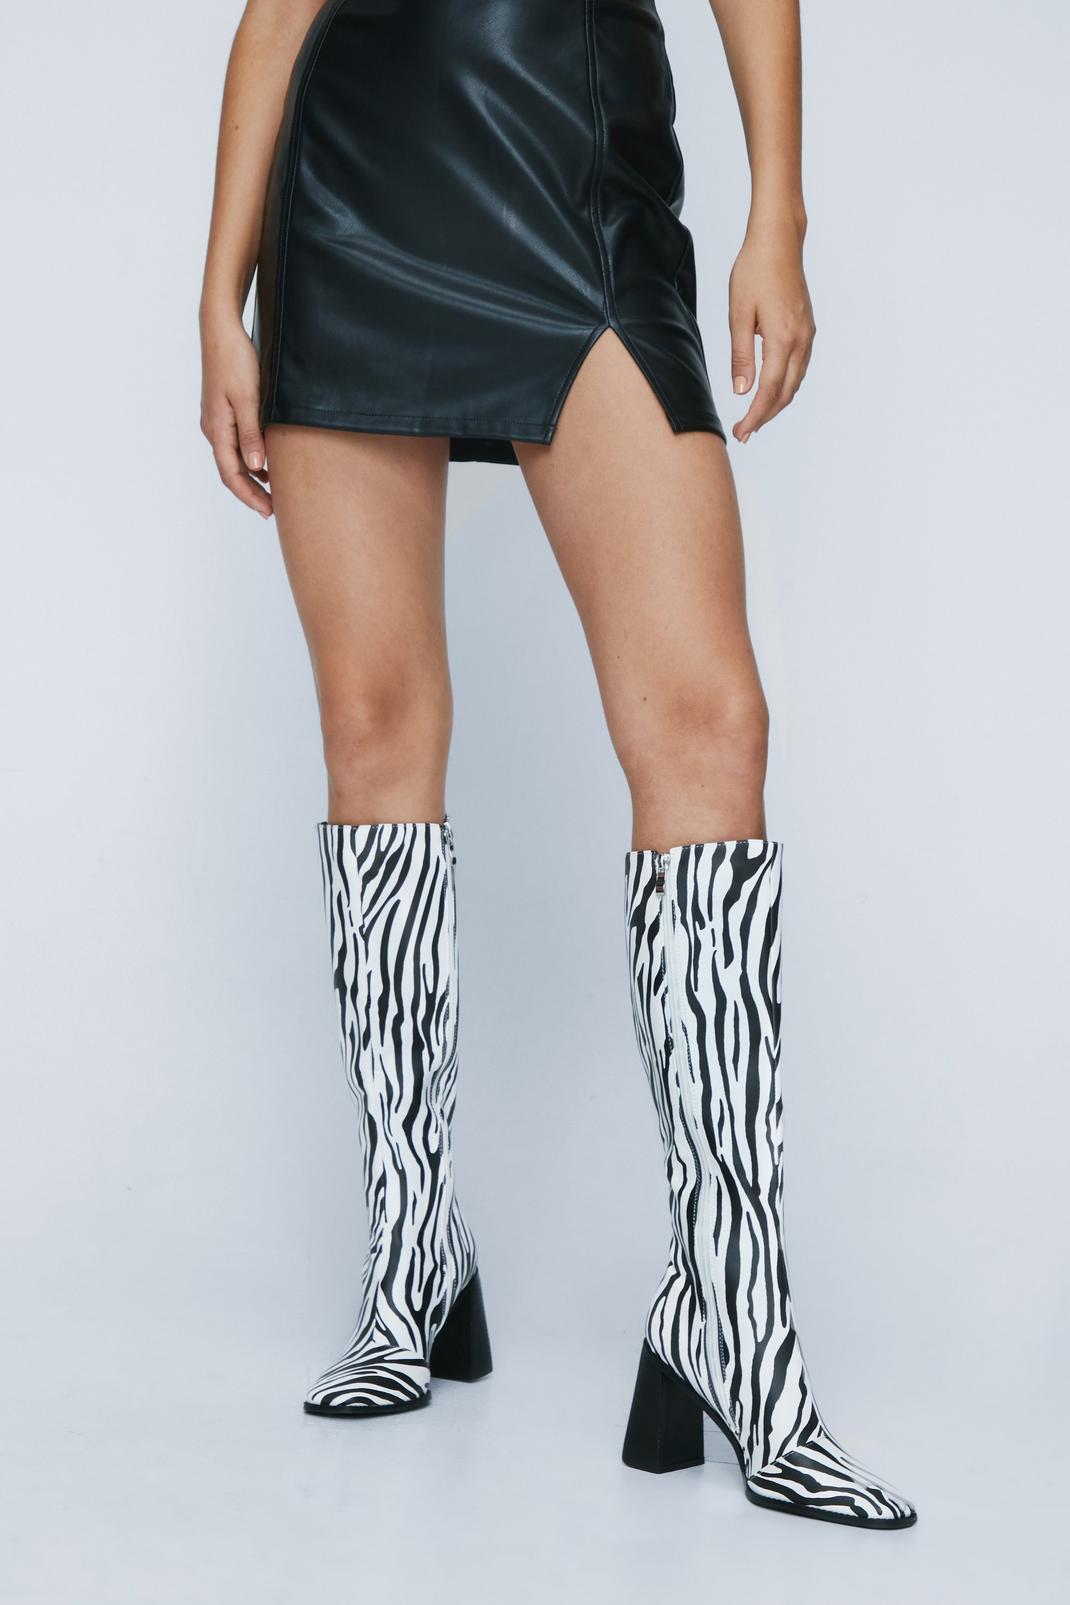 Zebra Print Knee High Boots image number 1